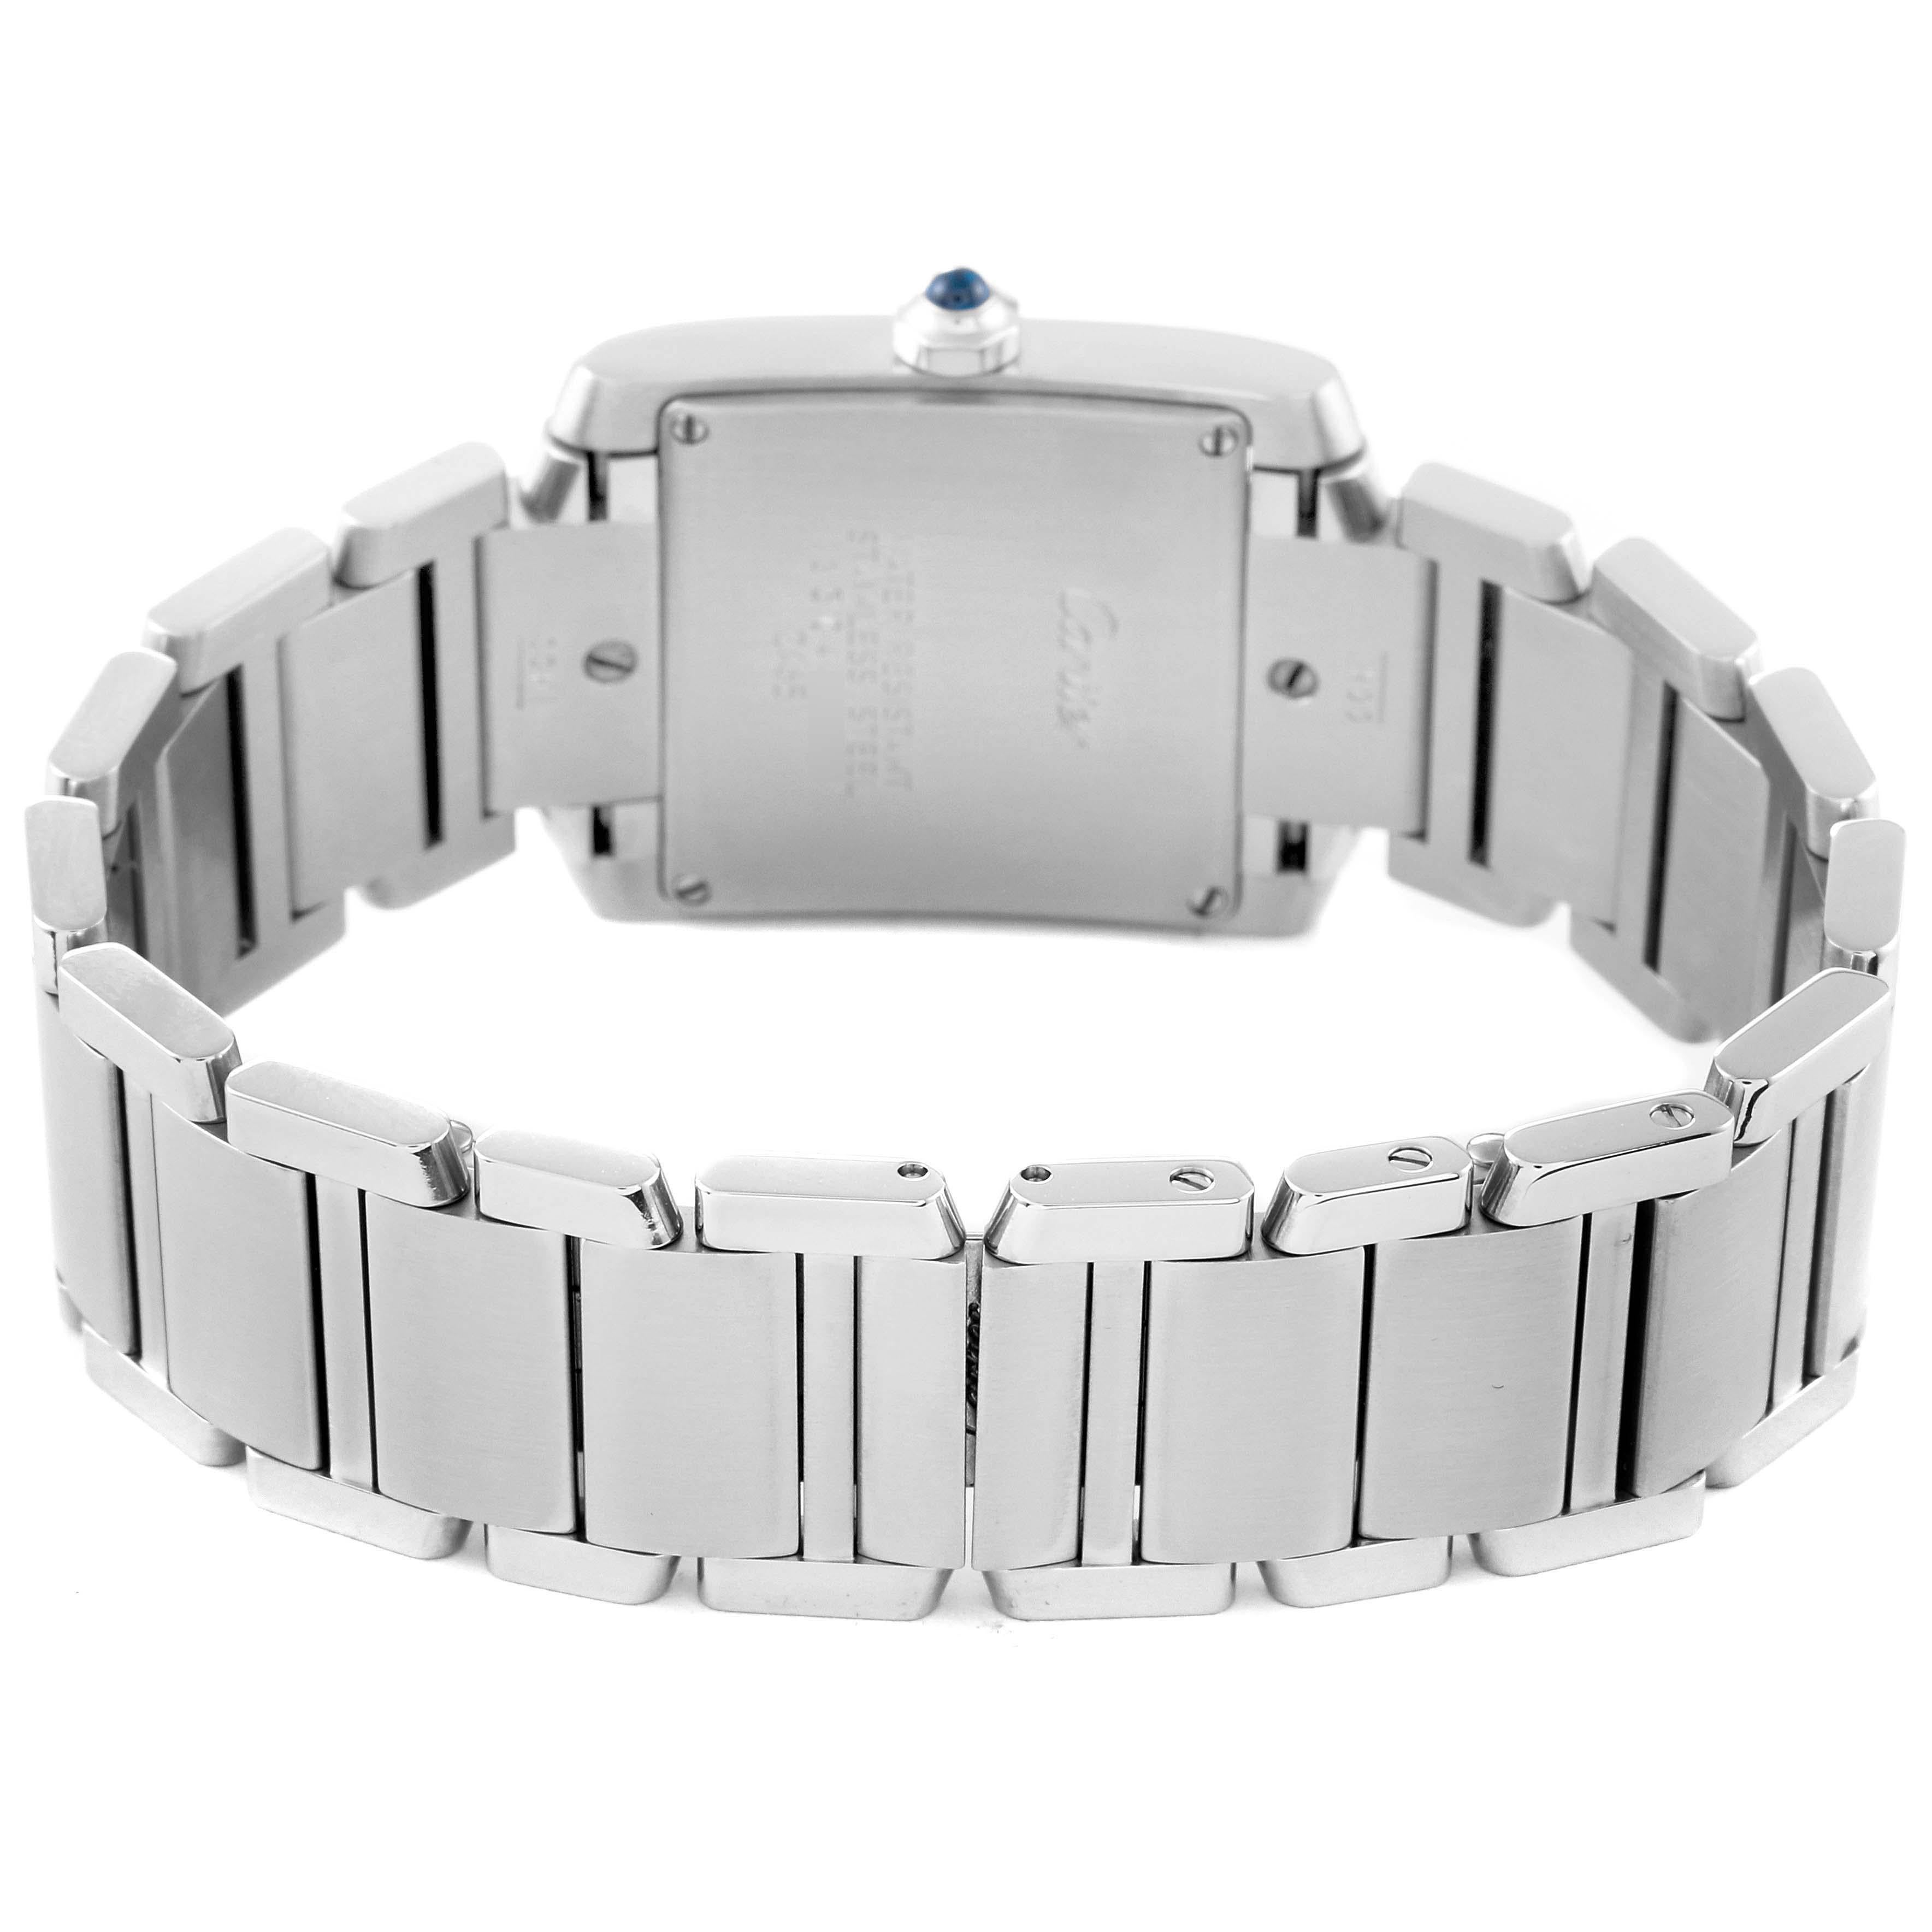 Cartier Tank Francaise Midsize Silver Dial Steel Ladies Watch W51003Q3 2